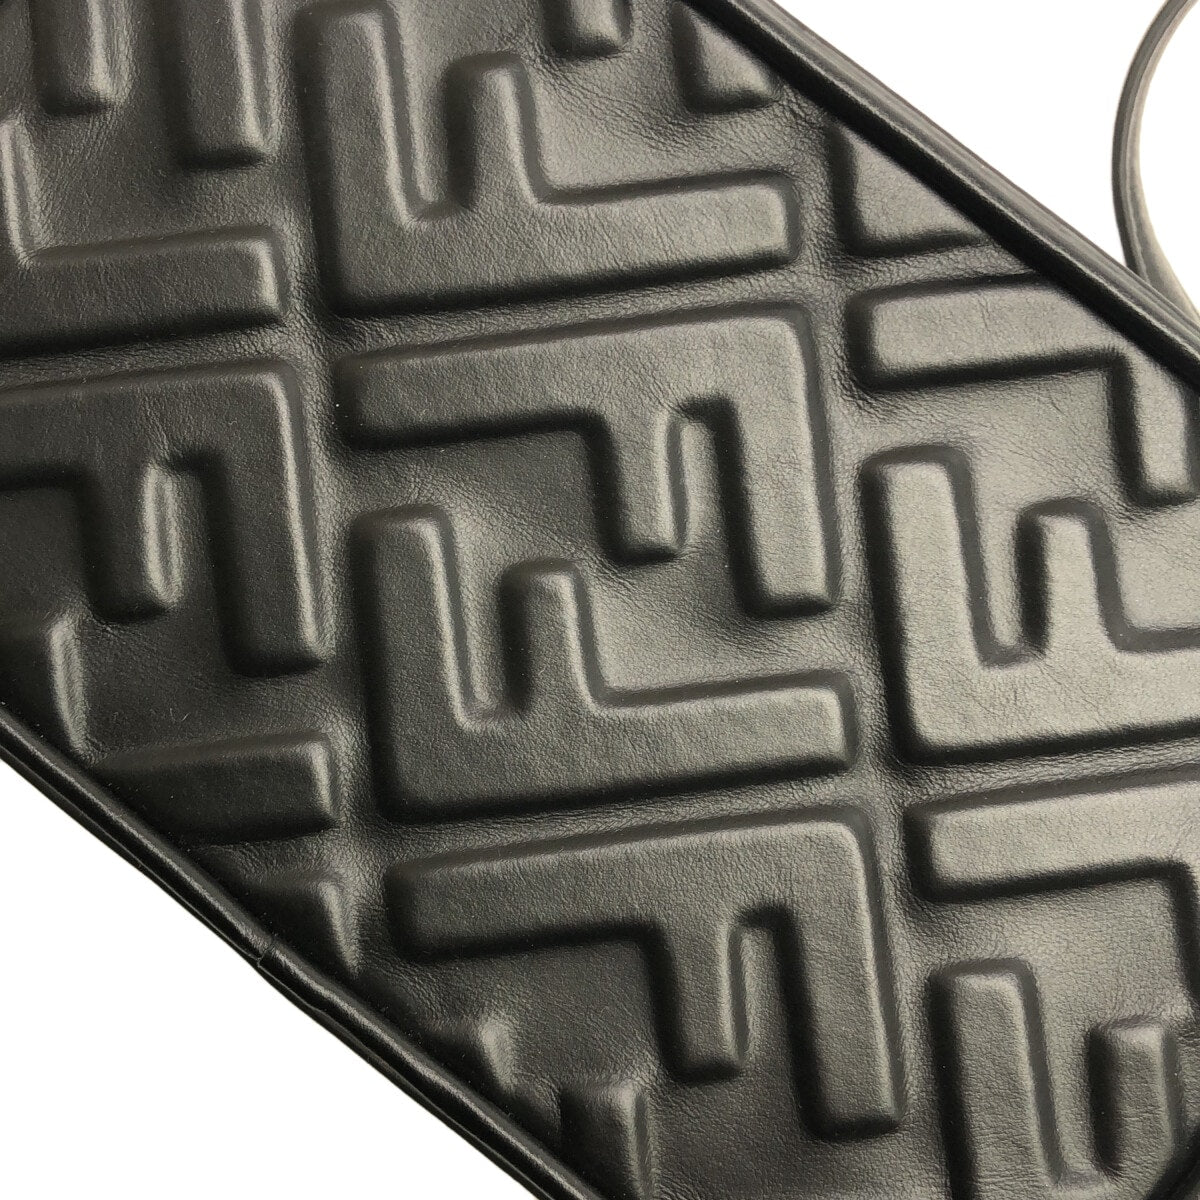 Fendi Camera Case Bag in Black Leather - Vault 55 | Preowned Designer Handbags